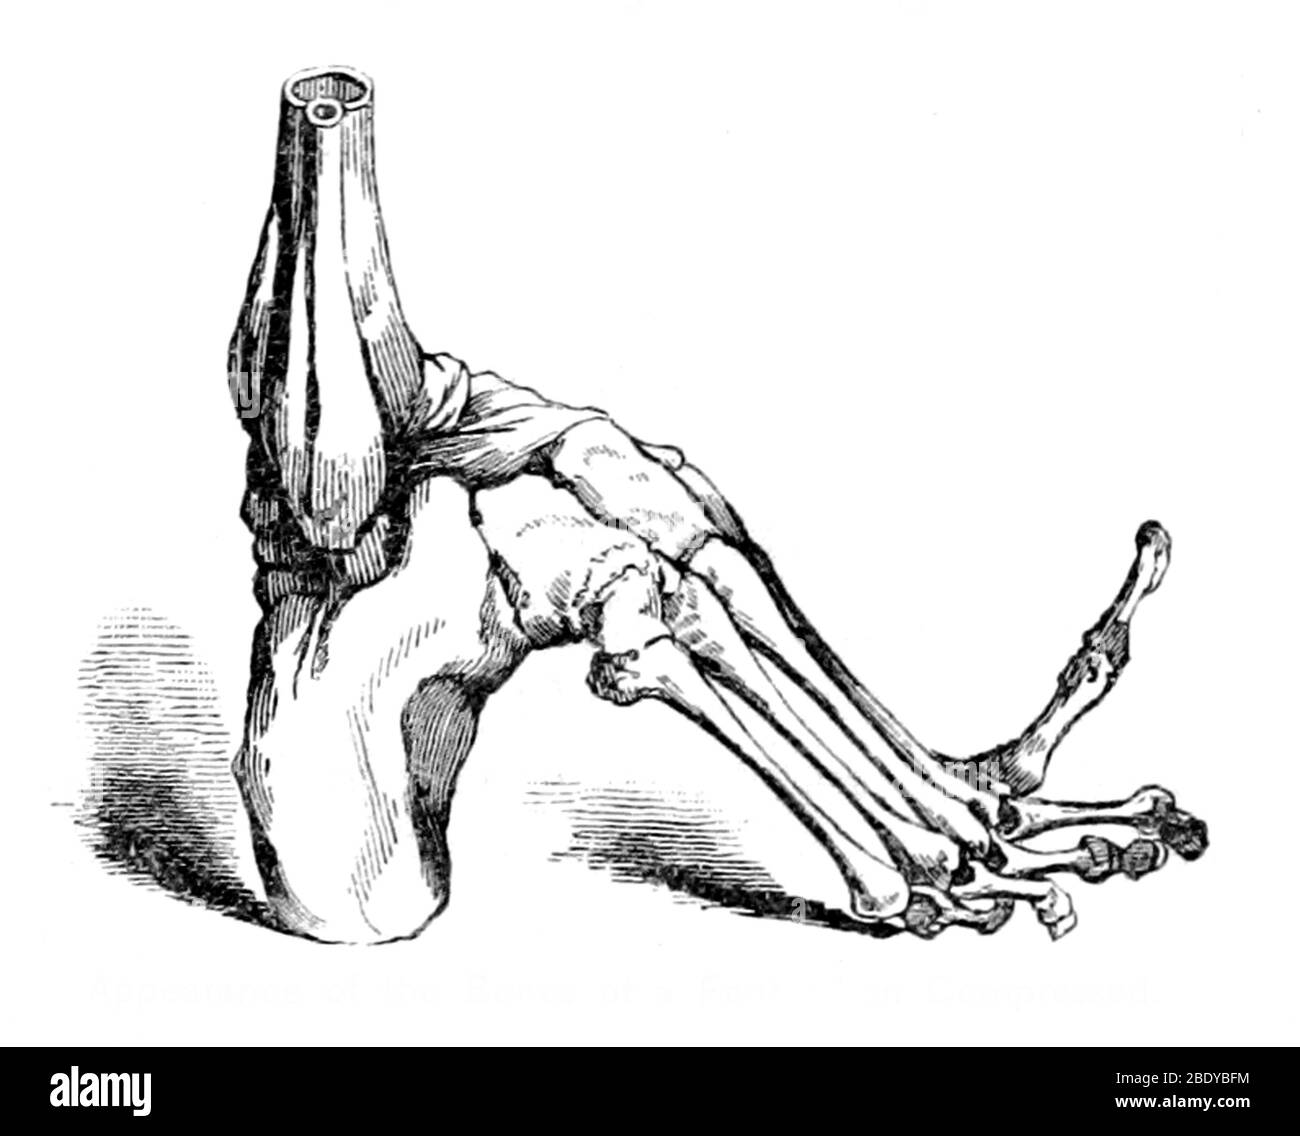 Knochen durch Fußbindung verkümmert, China, 1883 Stockfoto